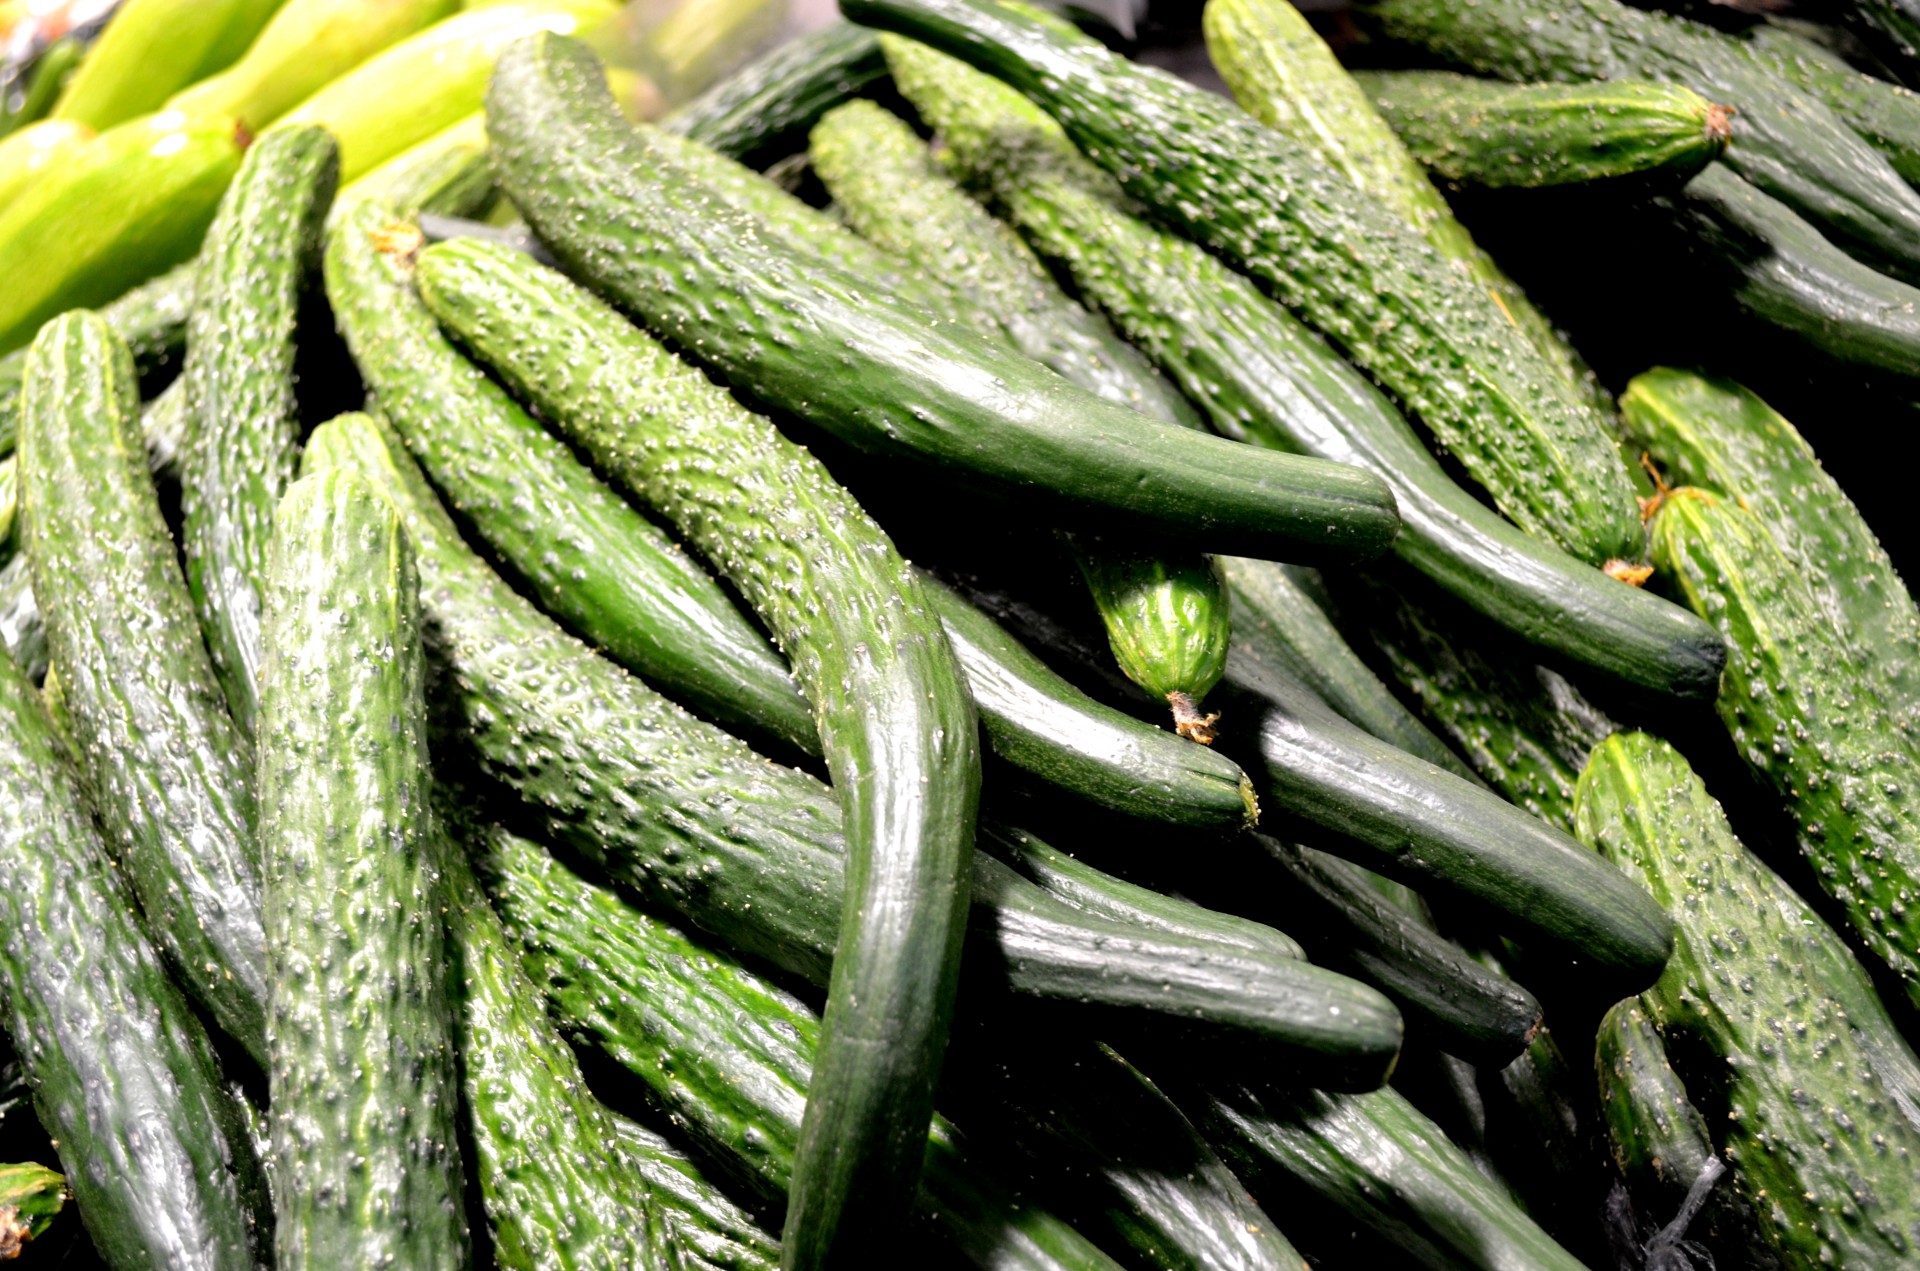 cucumbers on display